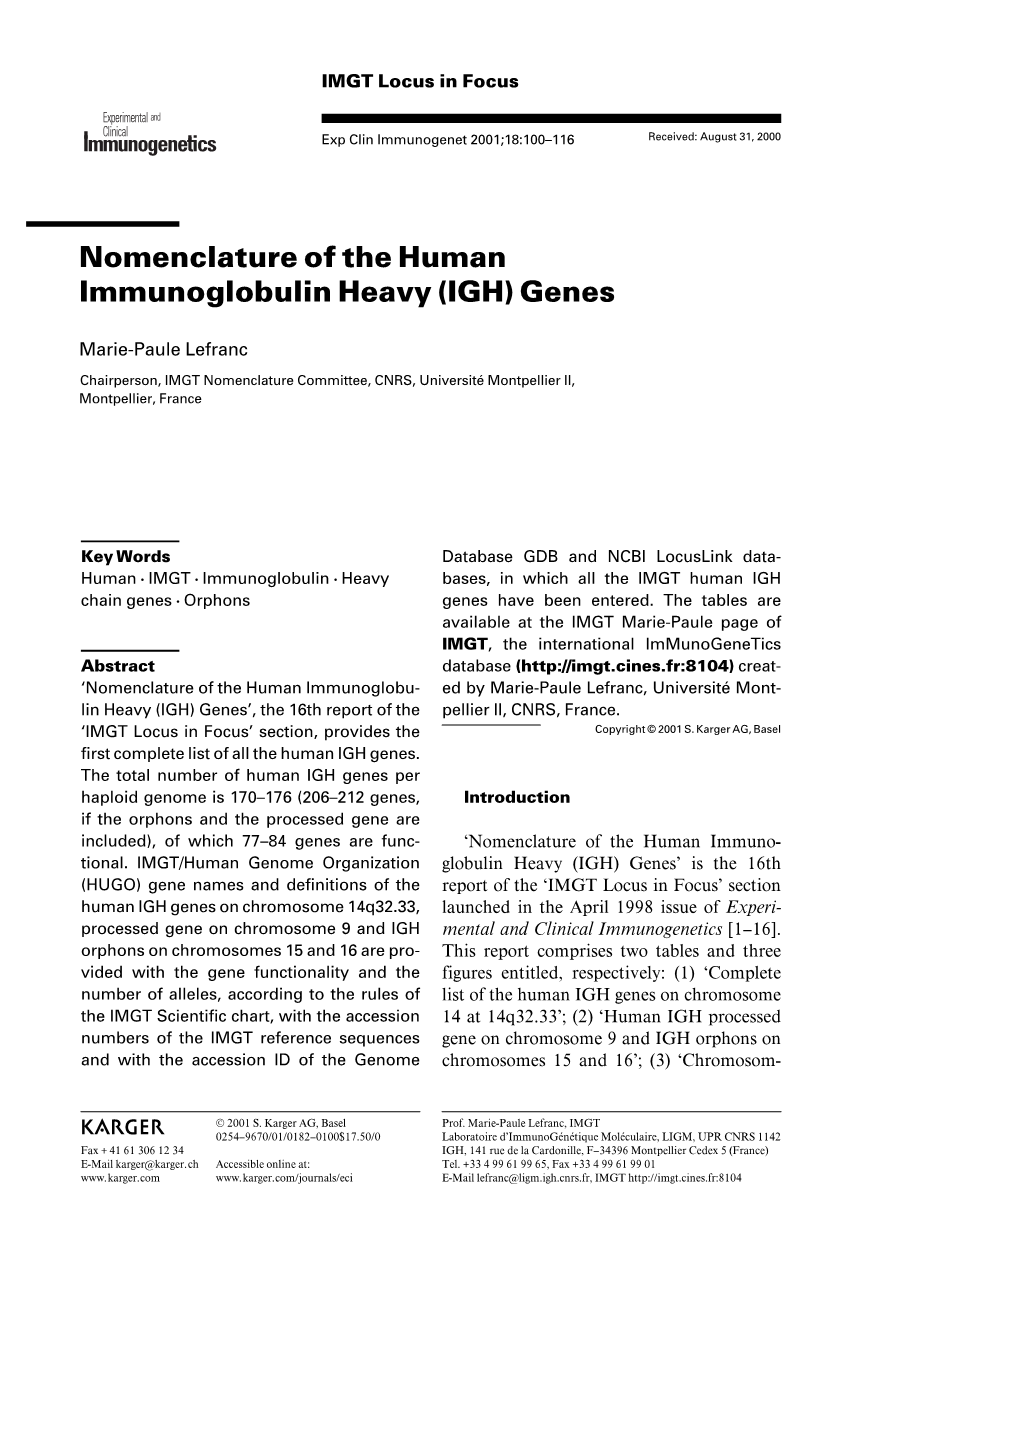 Nomenclature of the Human Immunoglobulin Heavy (IGH) Genes